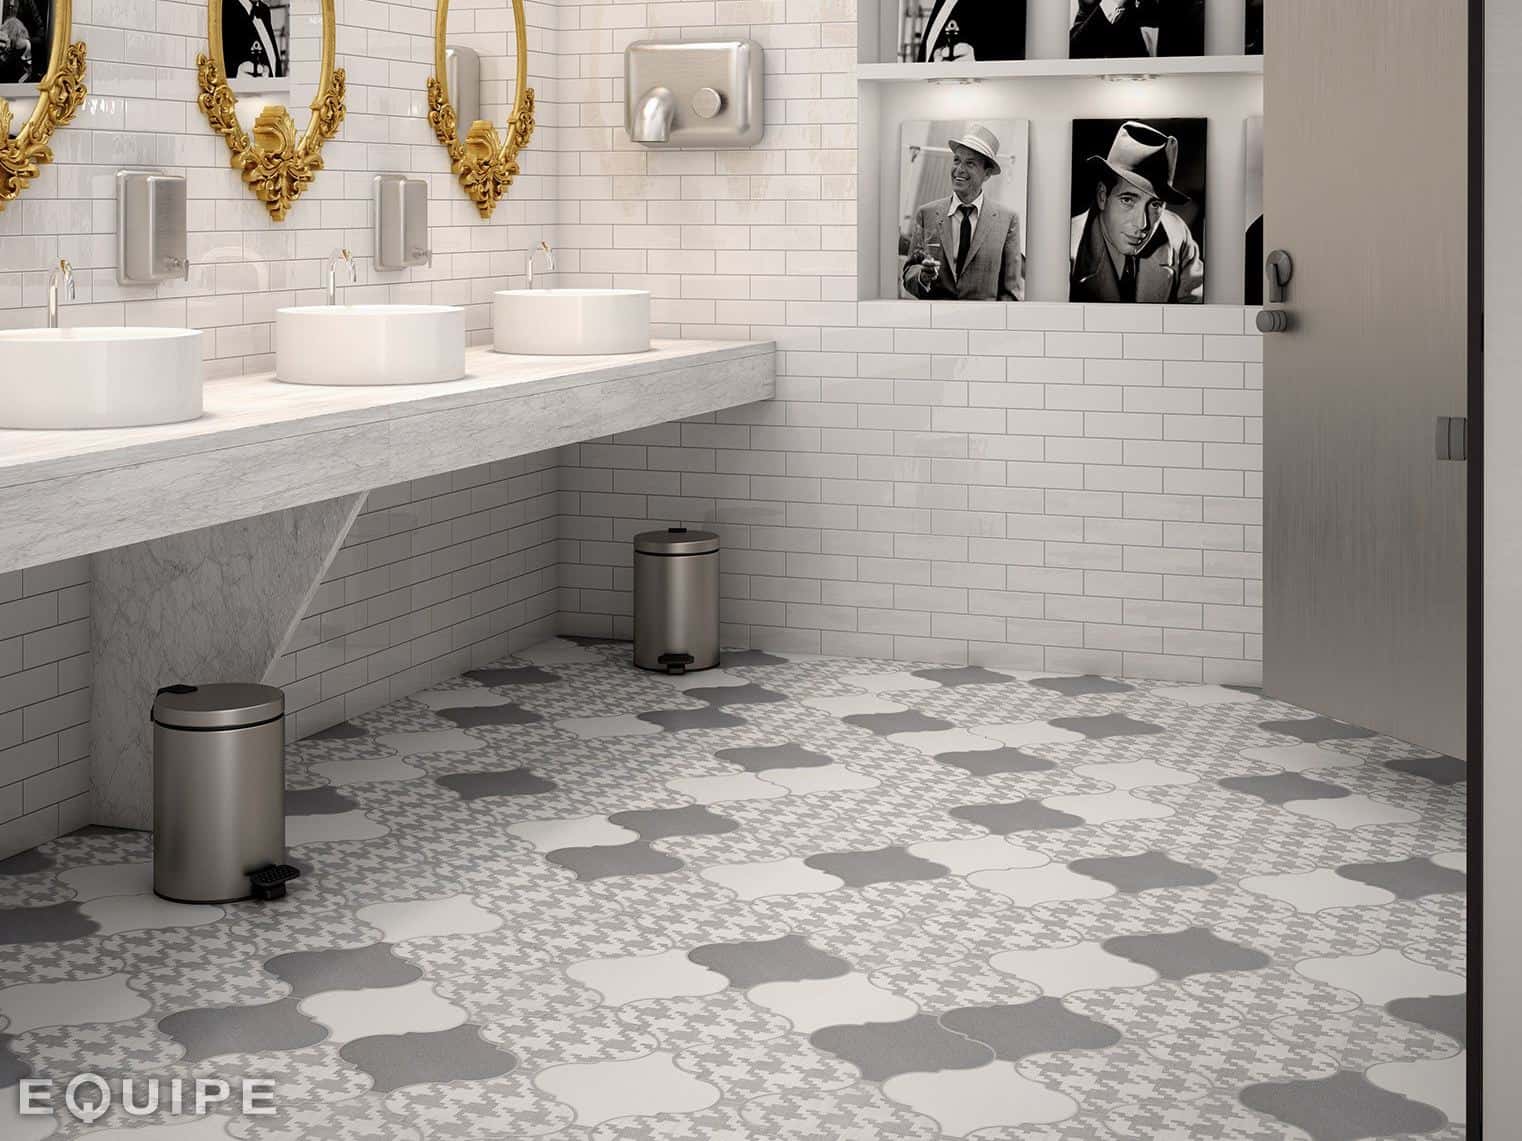 21 Arabesque Tile Ideas for Floor, Wall and Backsplash